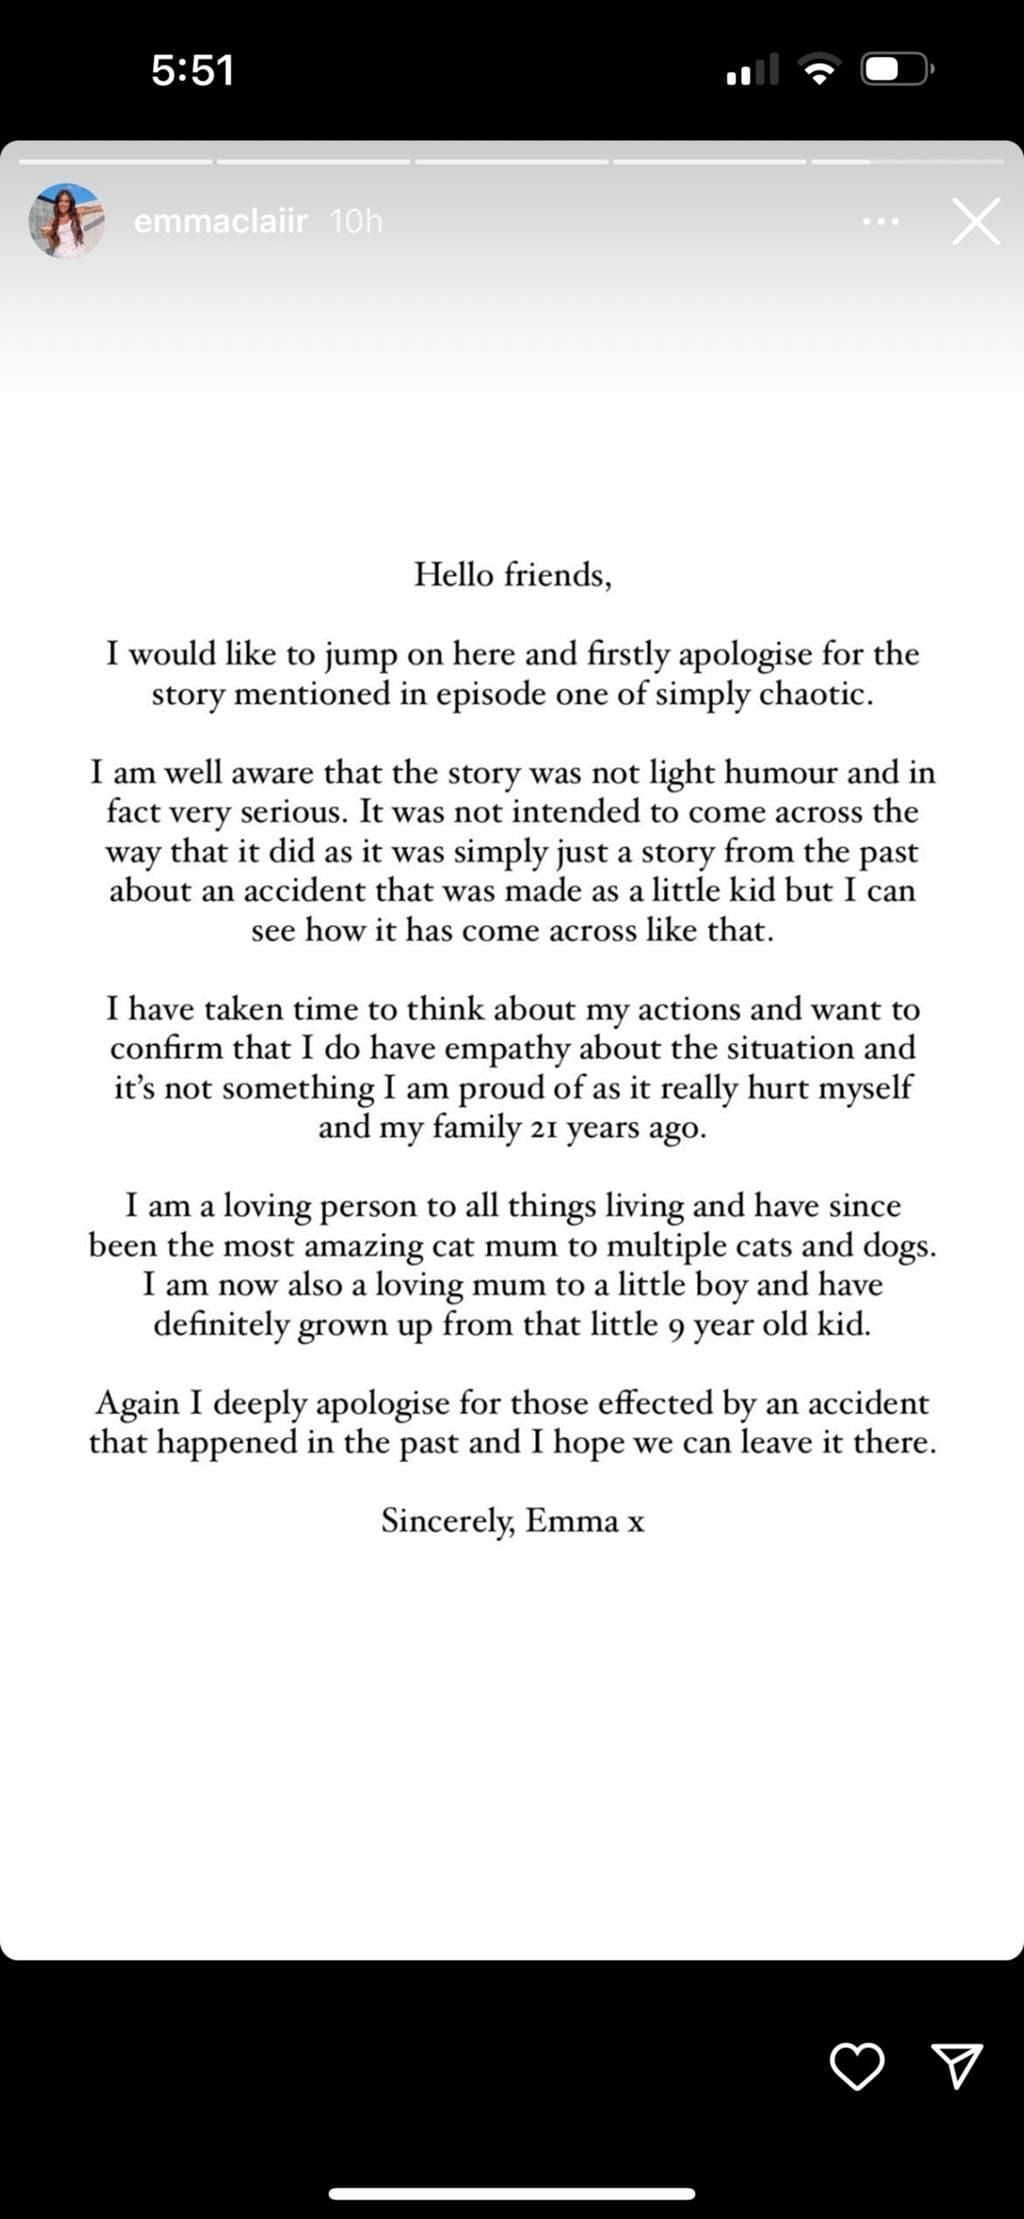 Emma Claiir uploads an apology statement after amassing backlash (Image via emmaclaiir/Instagram)